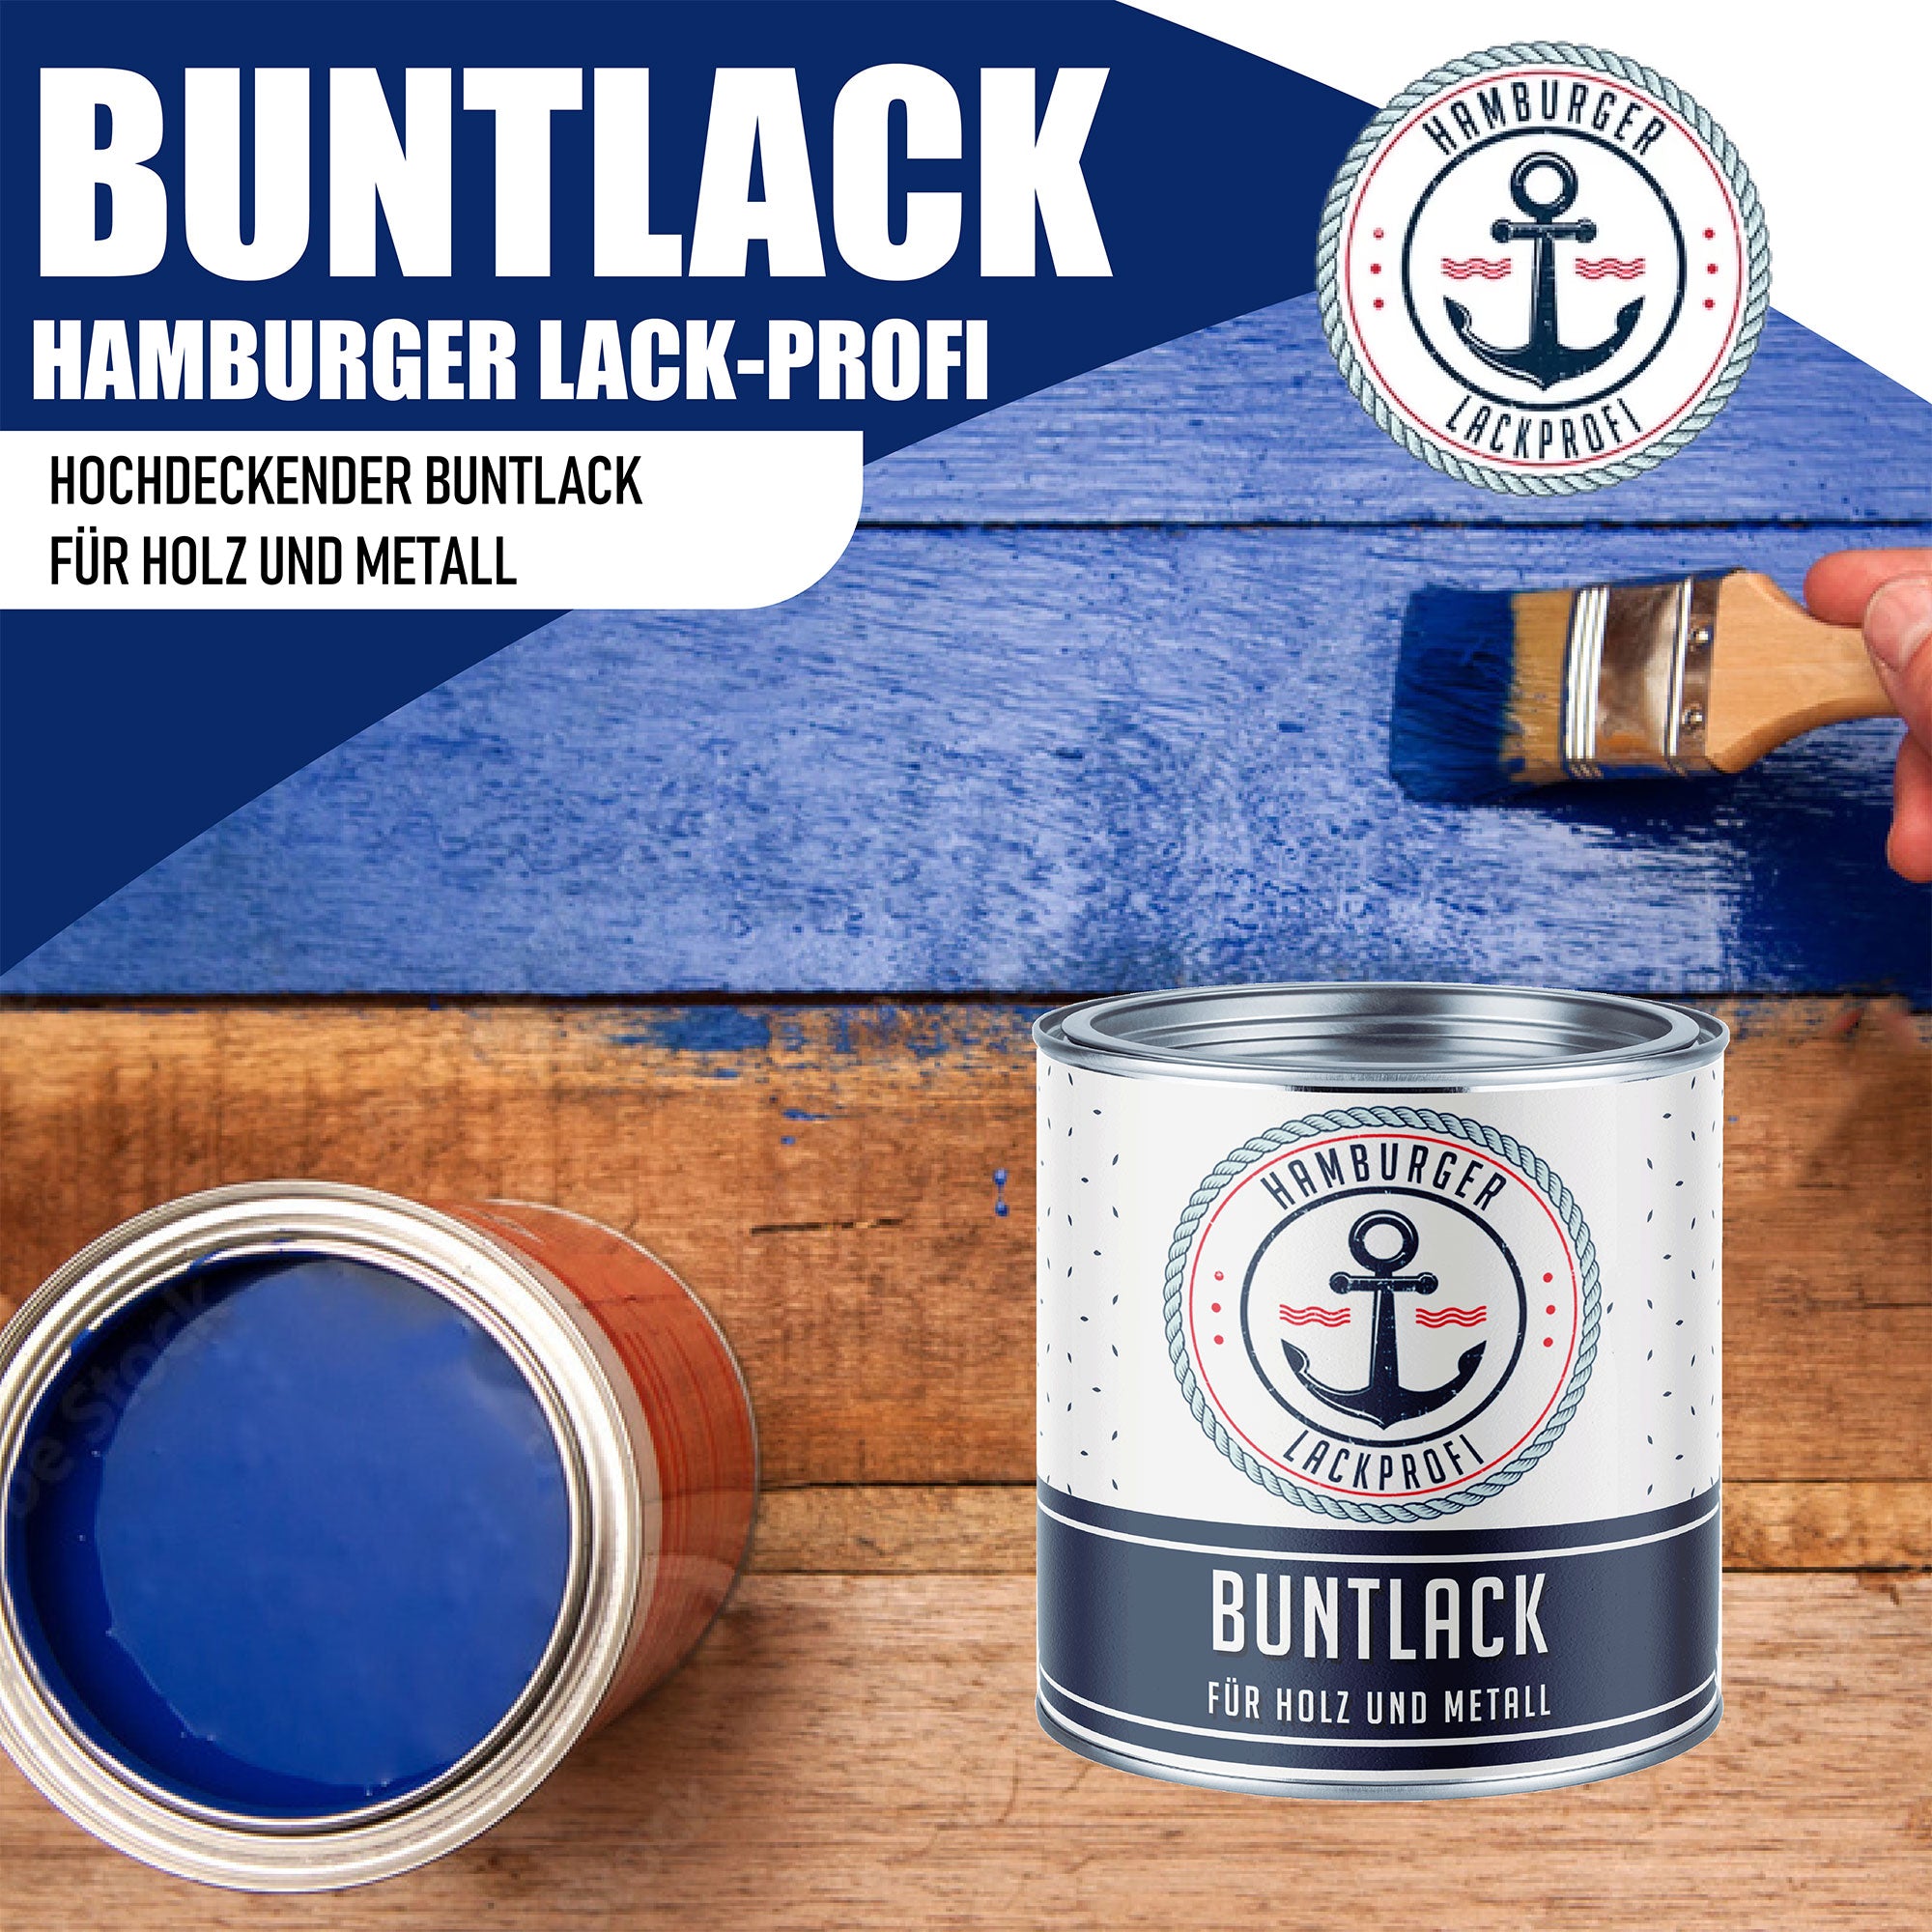 Hamburger Lack-Profi Buntlack Rotorange RAL 2001 - Robuster Kunstharzlack